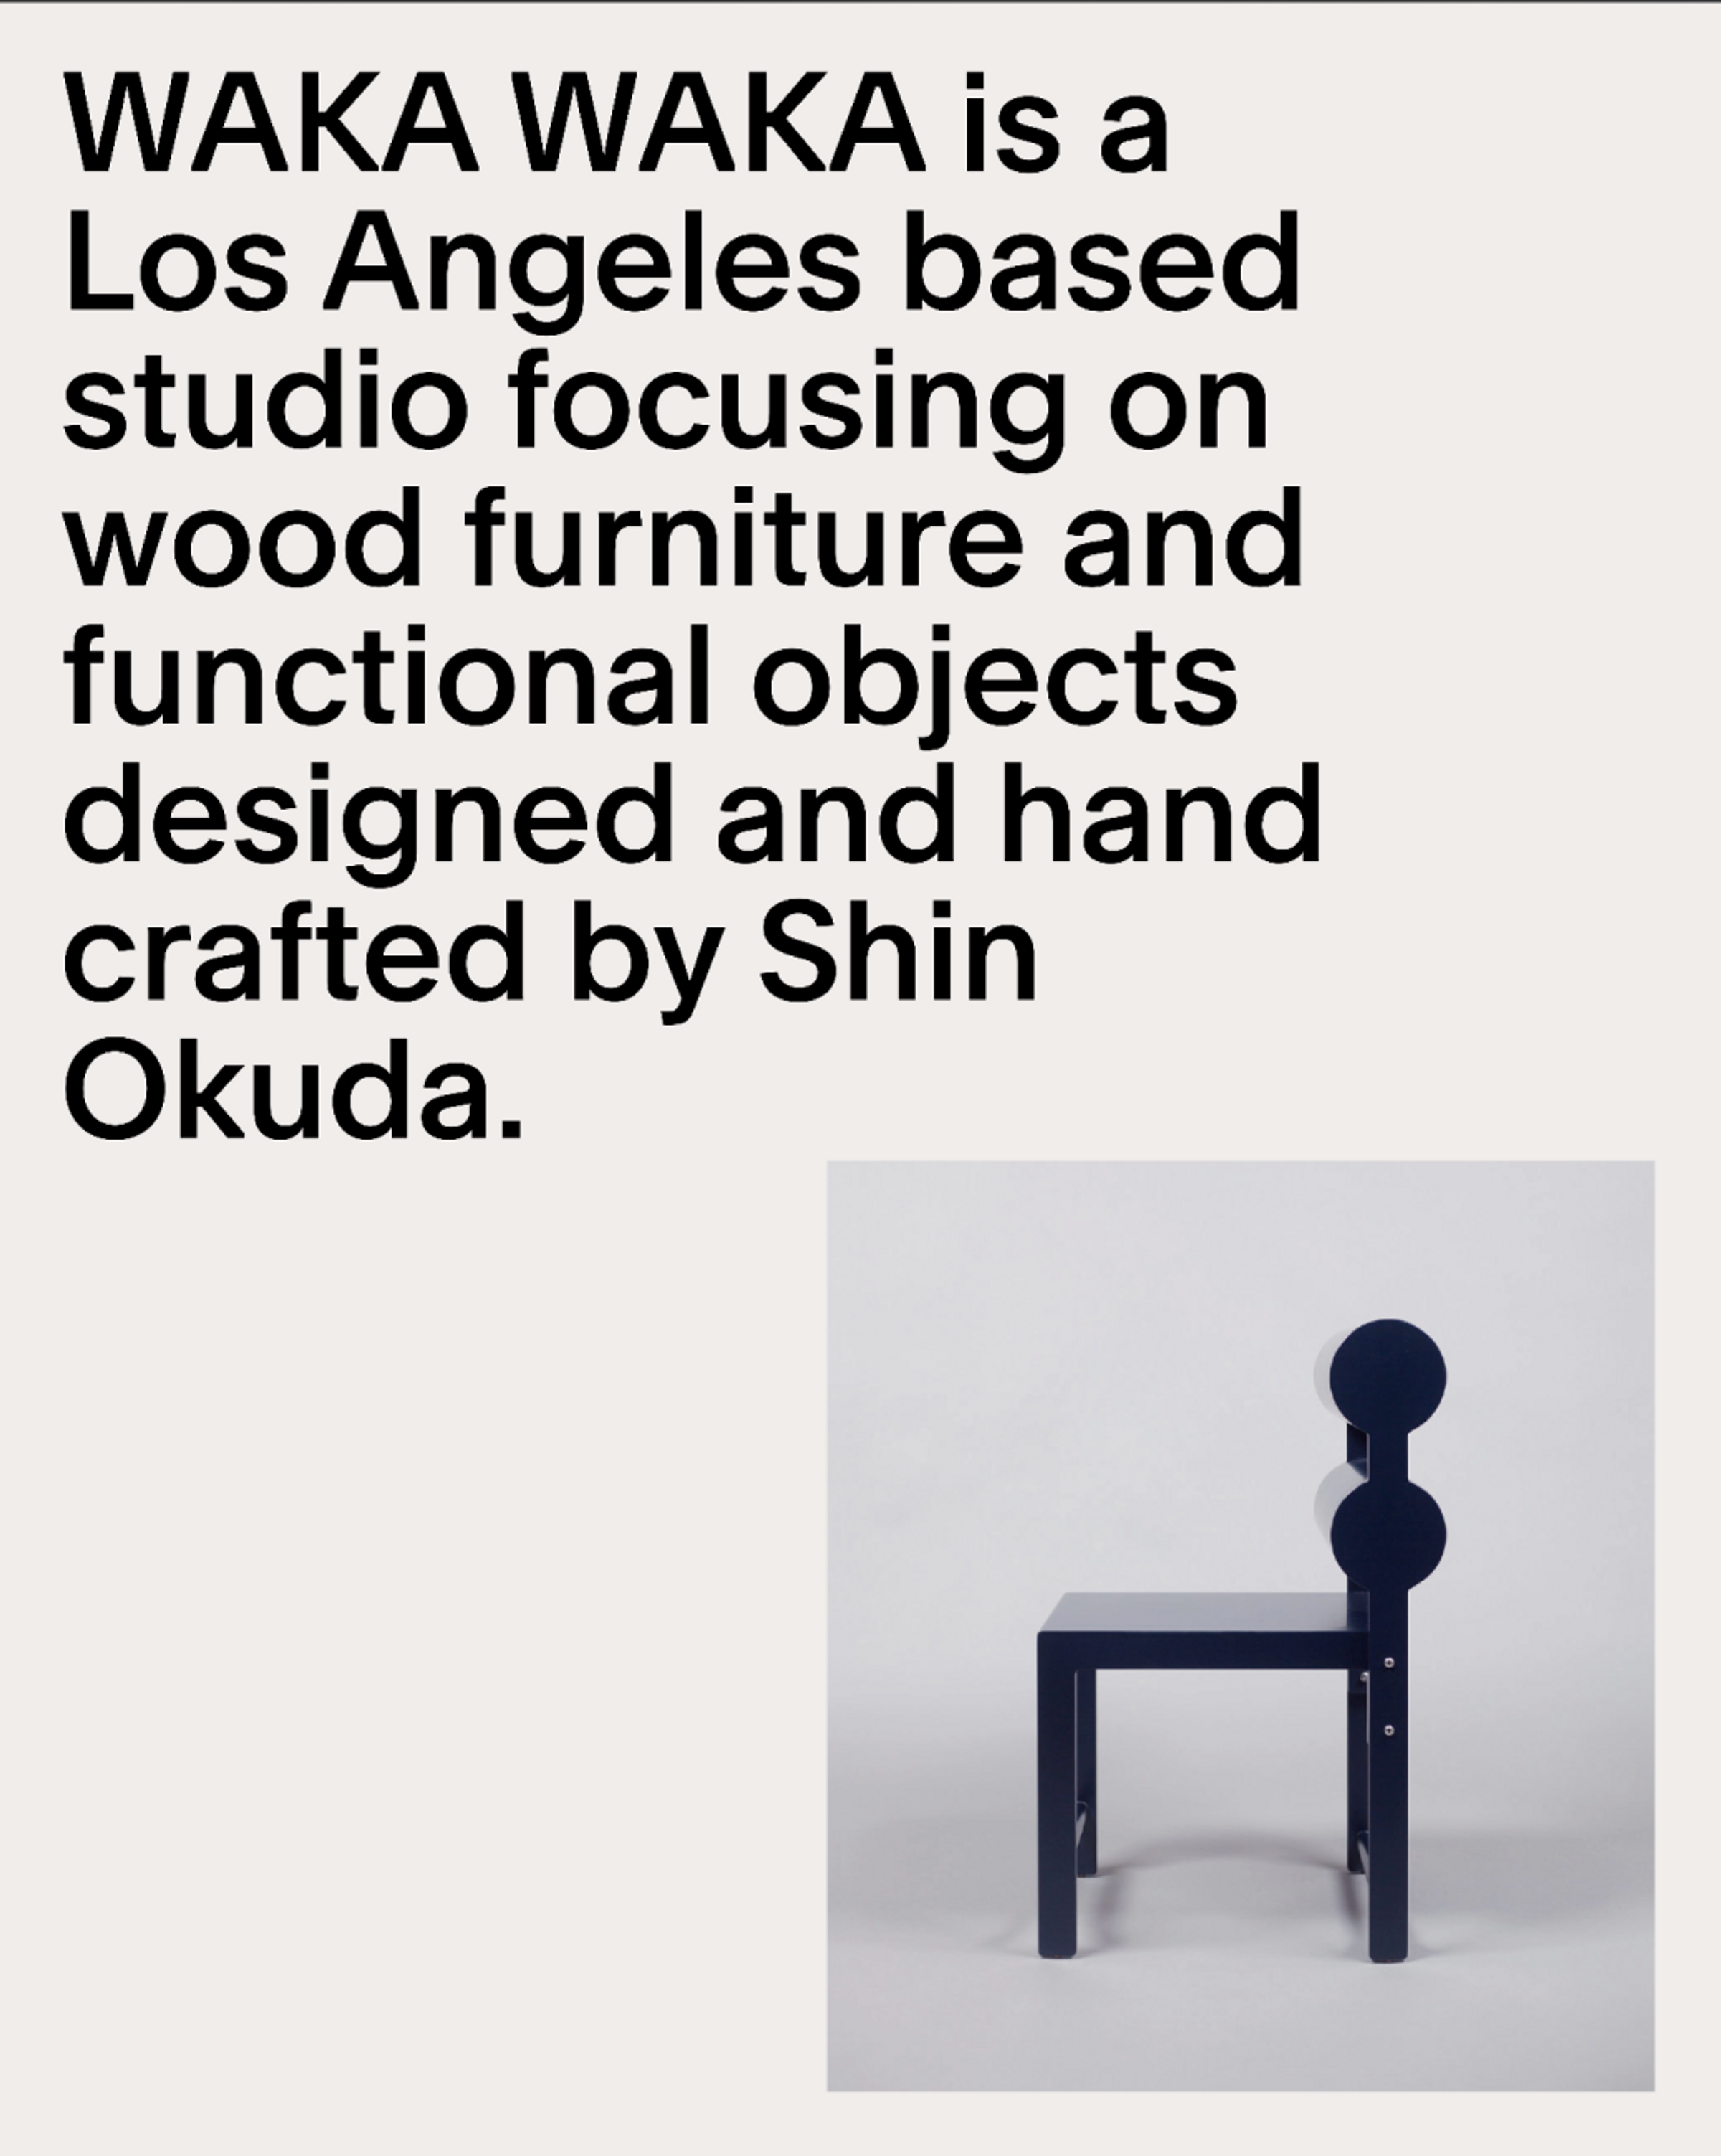 The Clarkson typeface used in branding for LA furniture studio Waka Waka